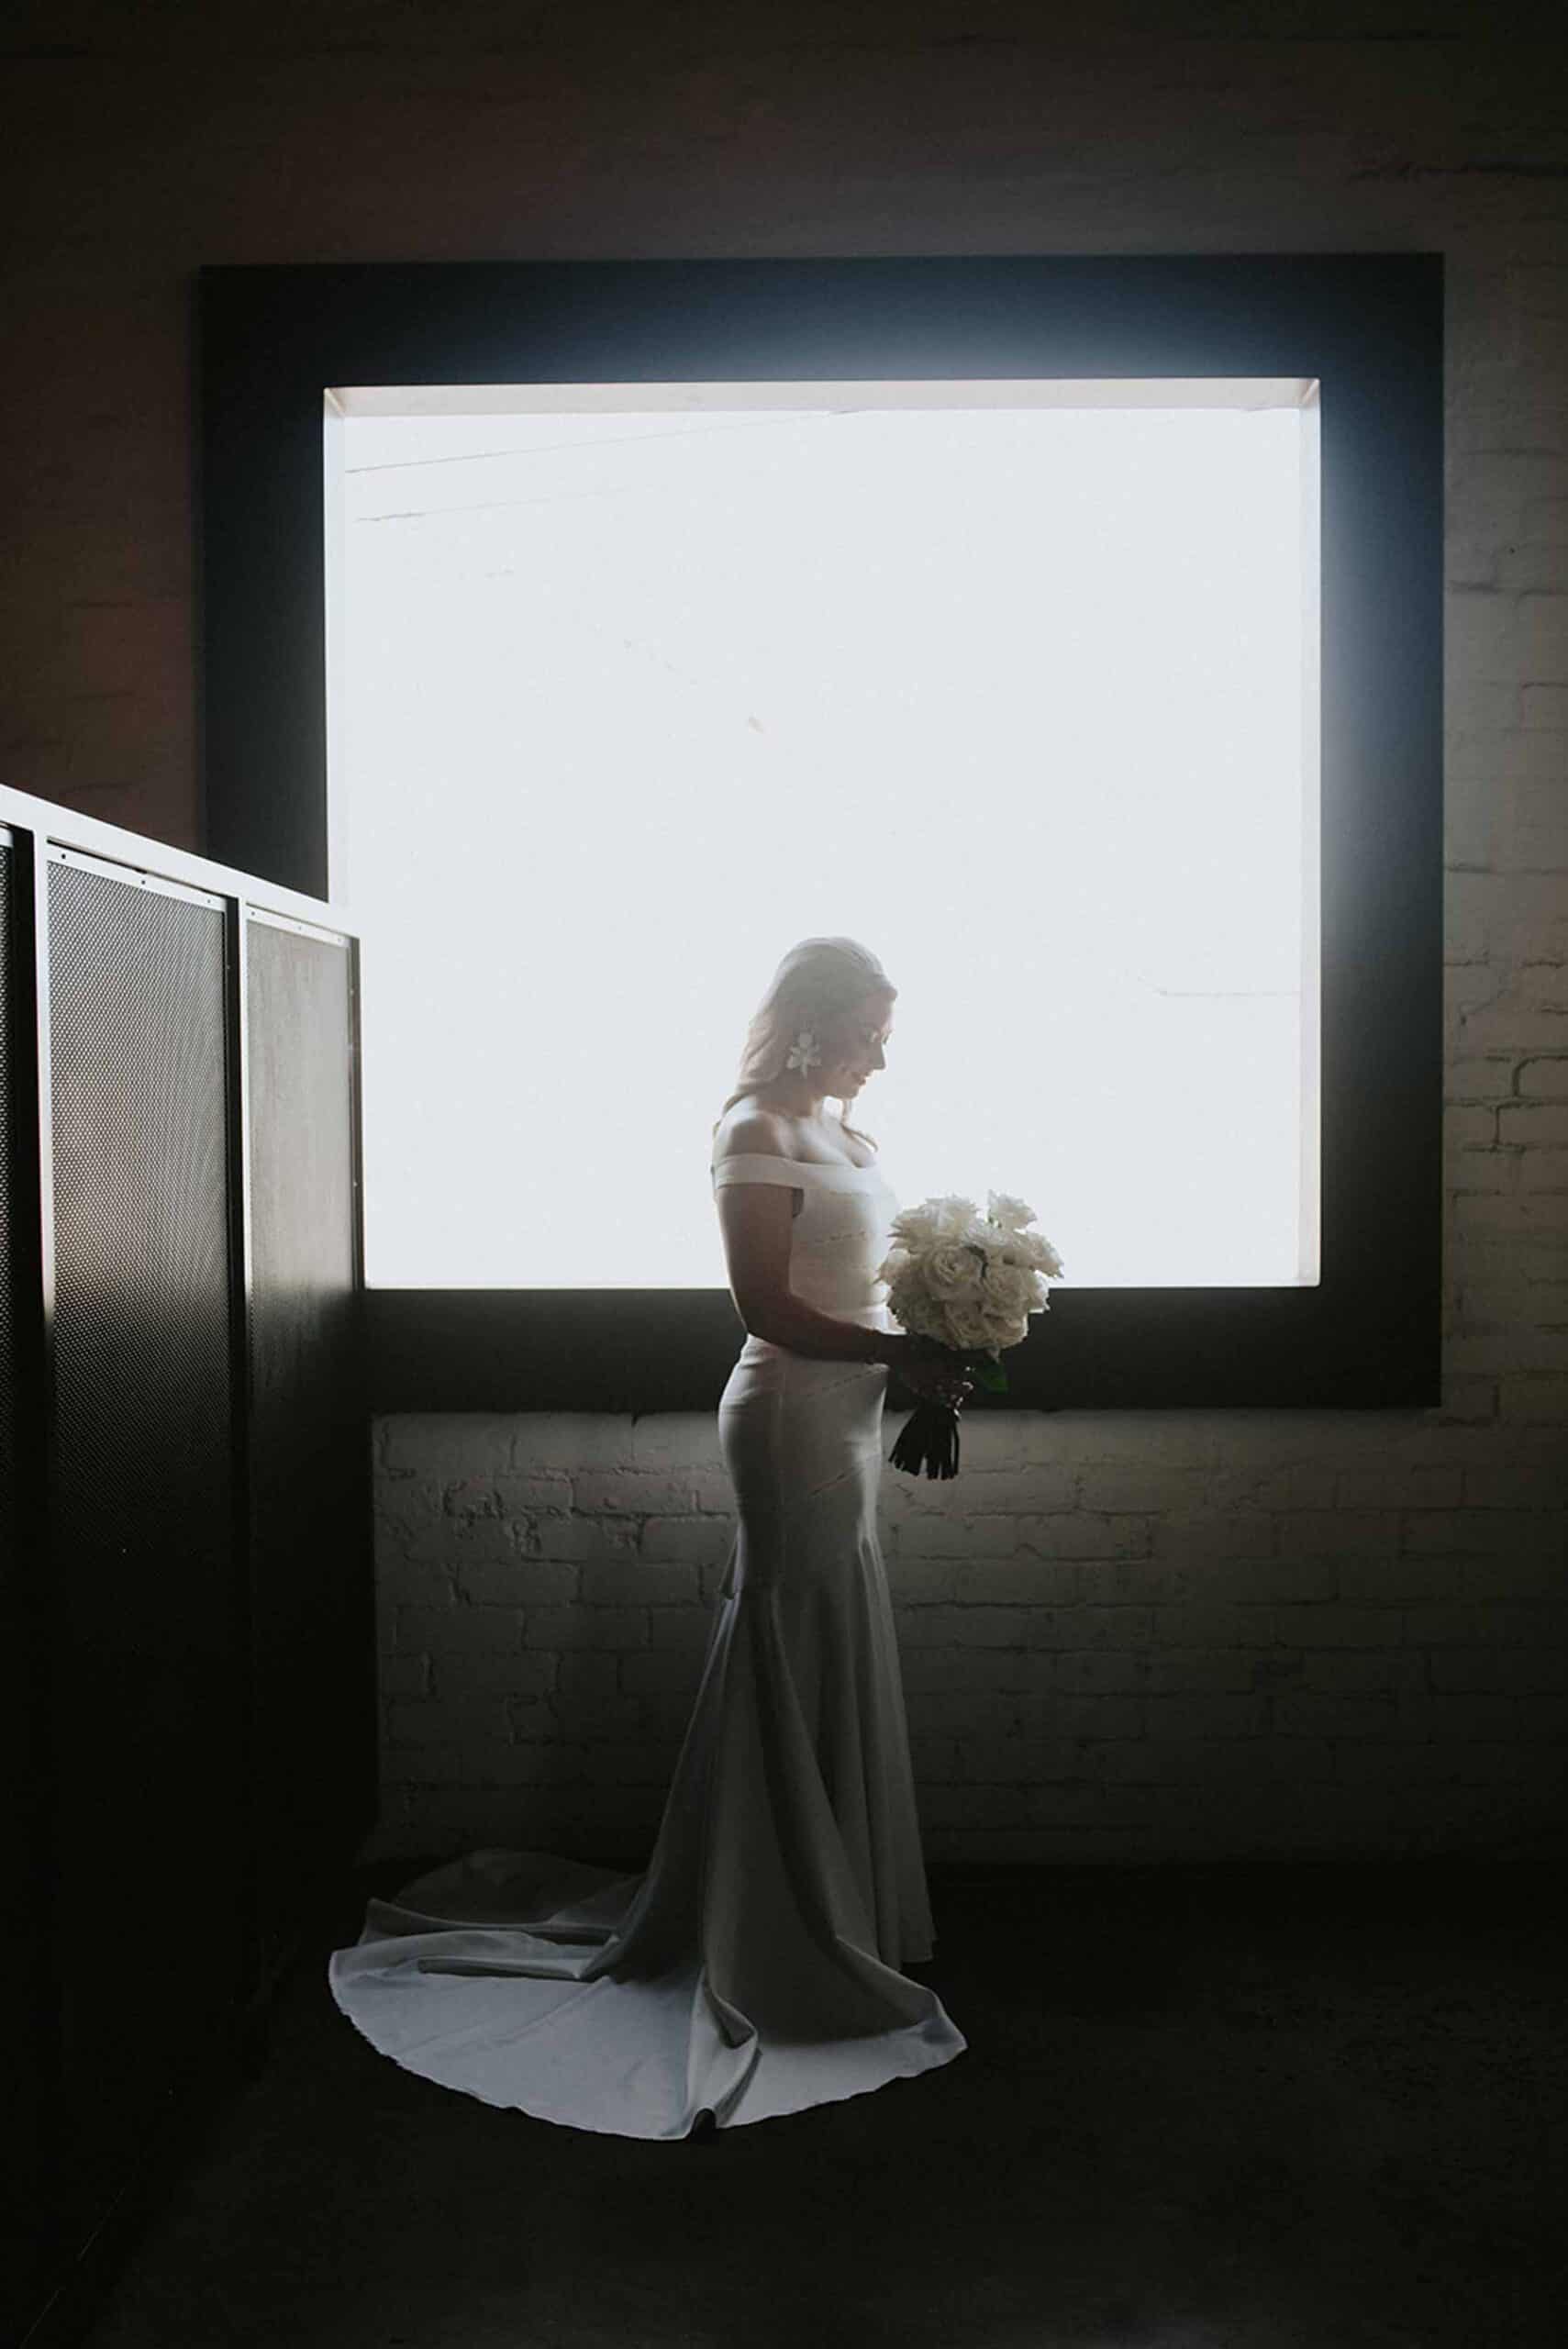 modern minimal off-shoulder wedding dress